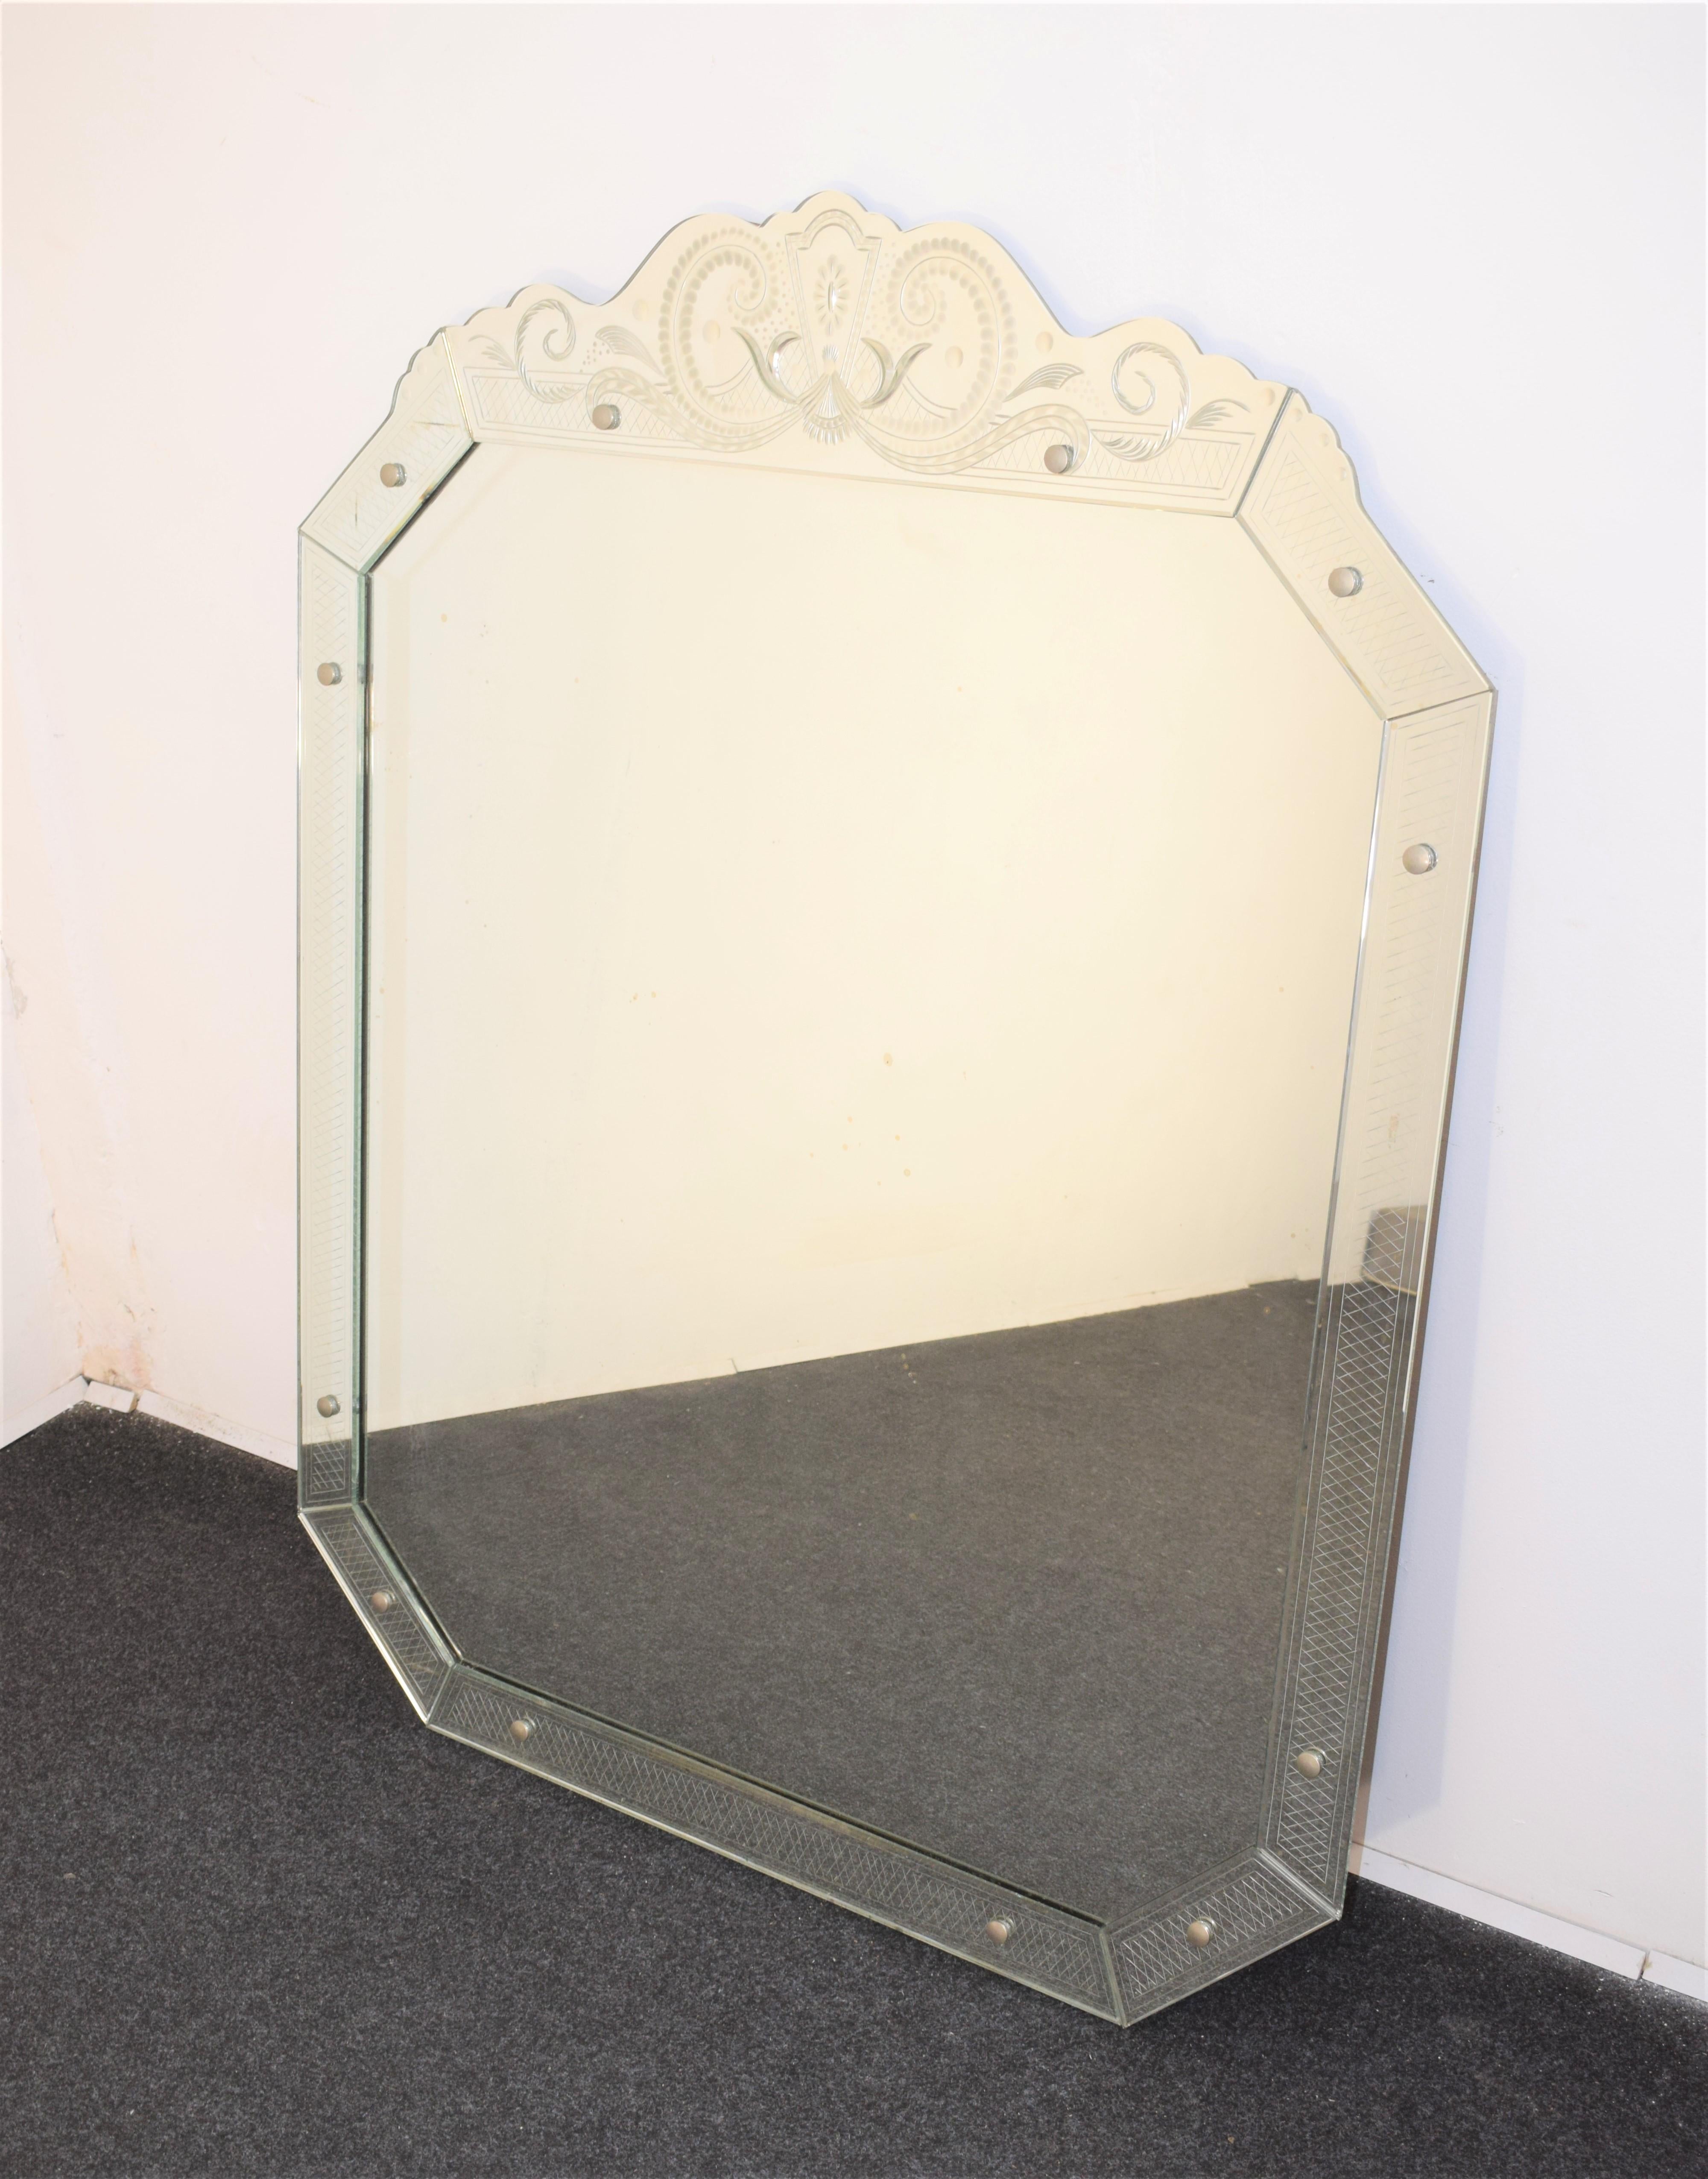 Italian mirror by Pietro Chiesa, 1950s.

Dimensions: H= 126 cm; W= 99 cm; D=4 cm.